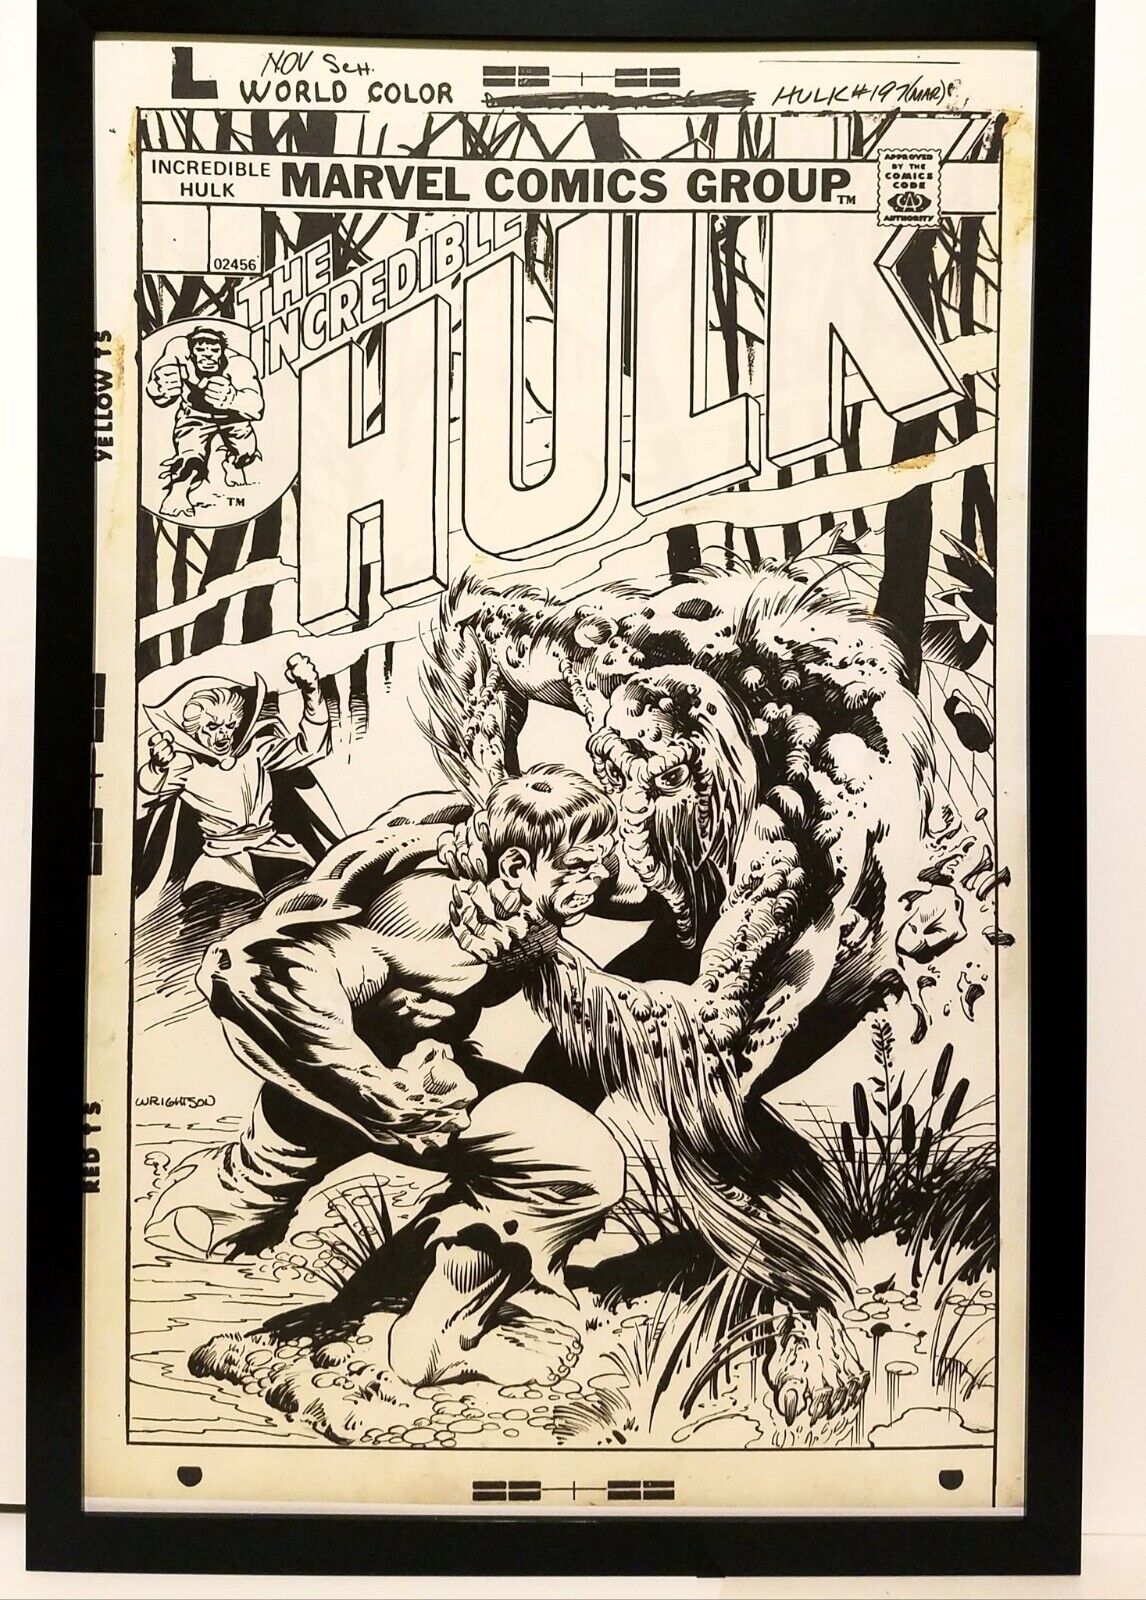 Incredible Hulk #197 by Bernie Wrightson 11x17 FRAMED Original Art Poster Marvel